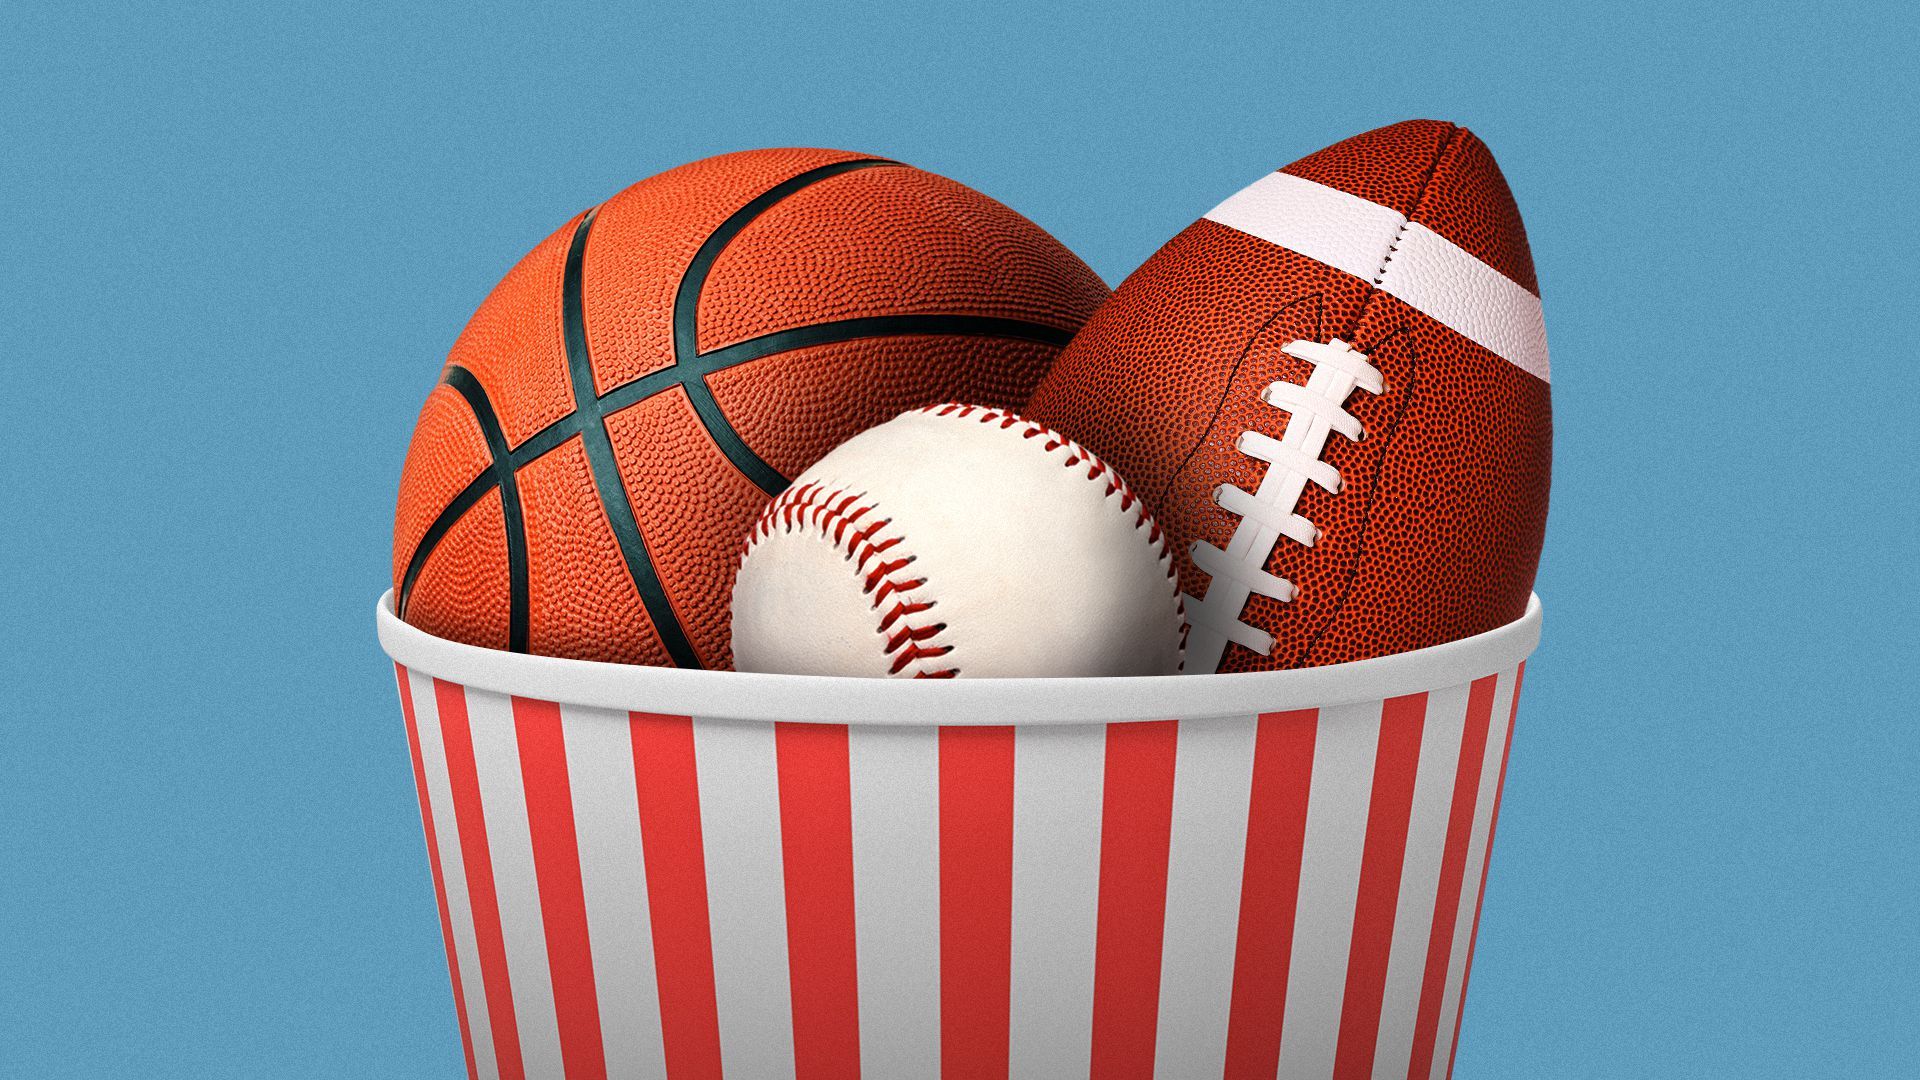 Illustration of a basketball, football, and baseball in a popcorn bucket.